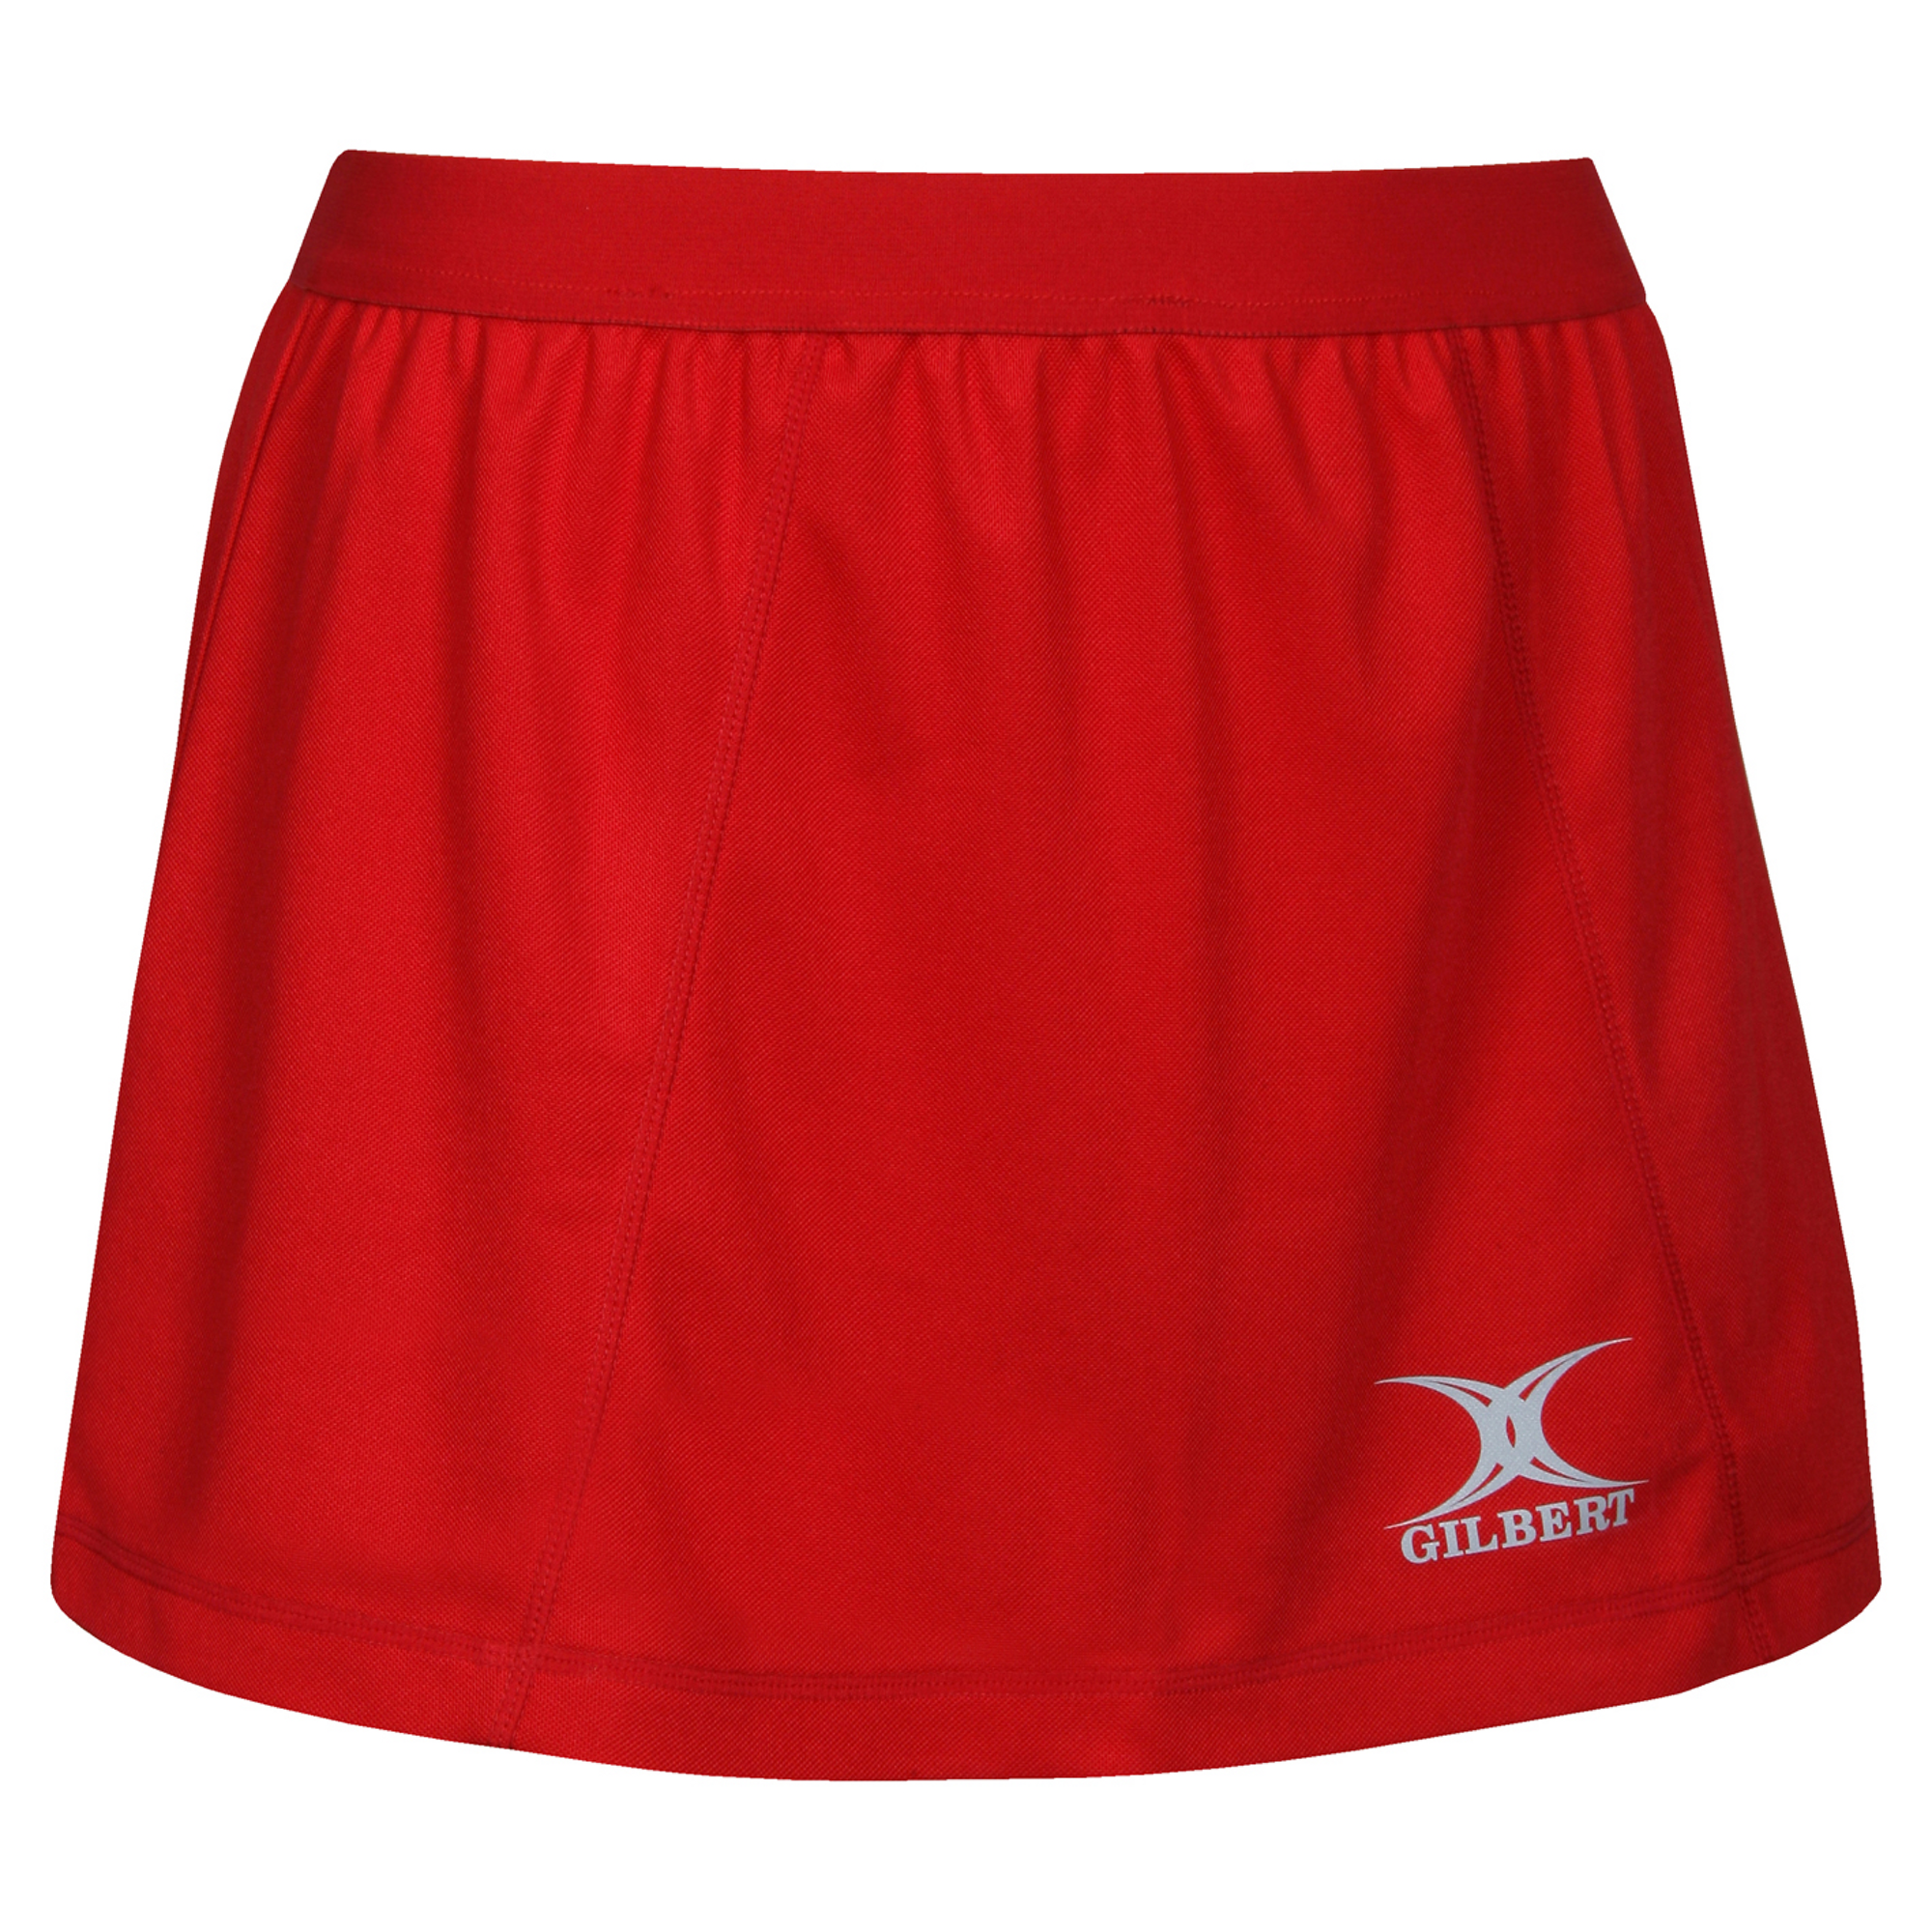 Gilbert Blaze Netball Skirt 6 Red